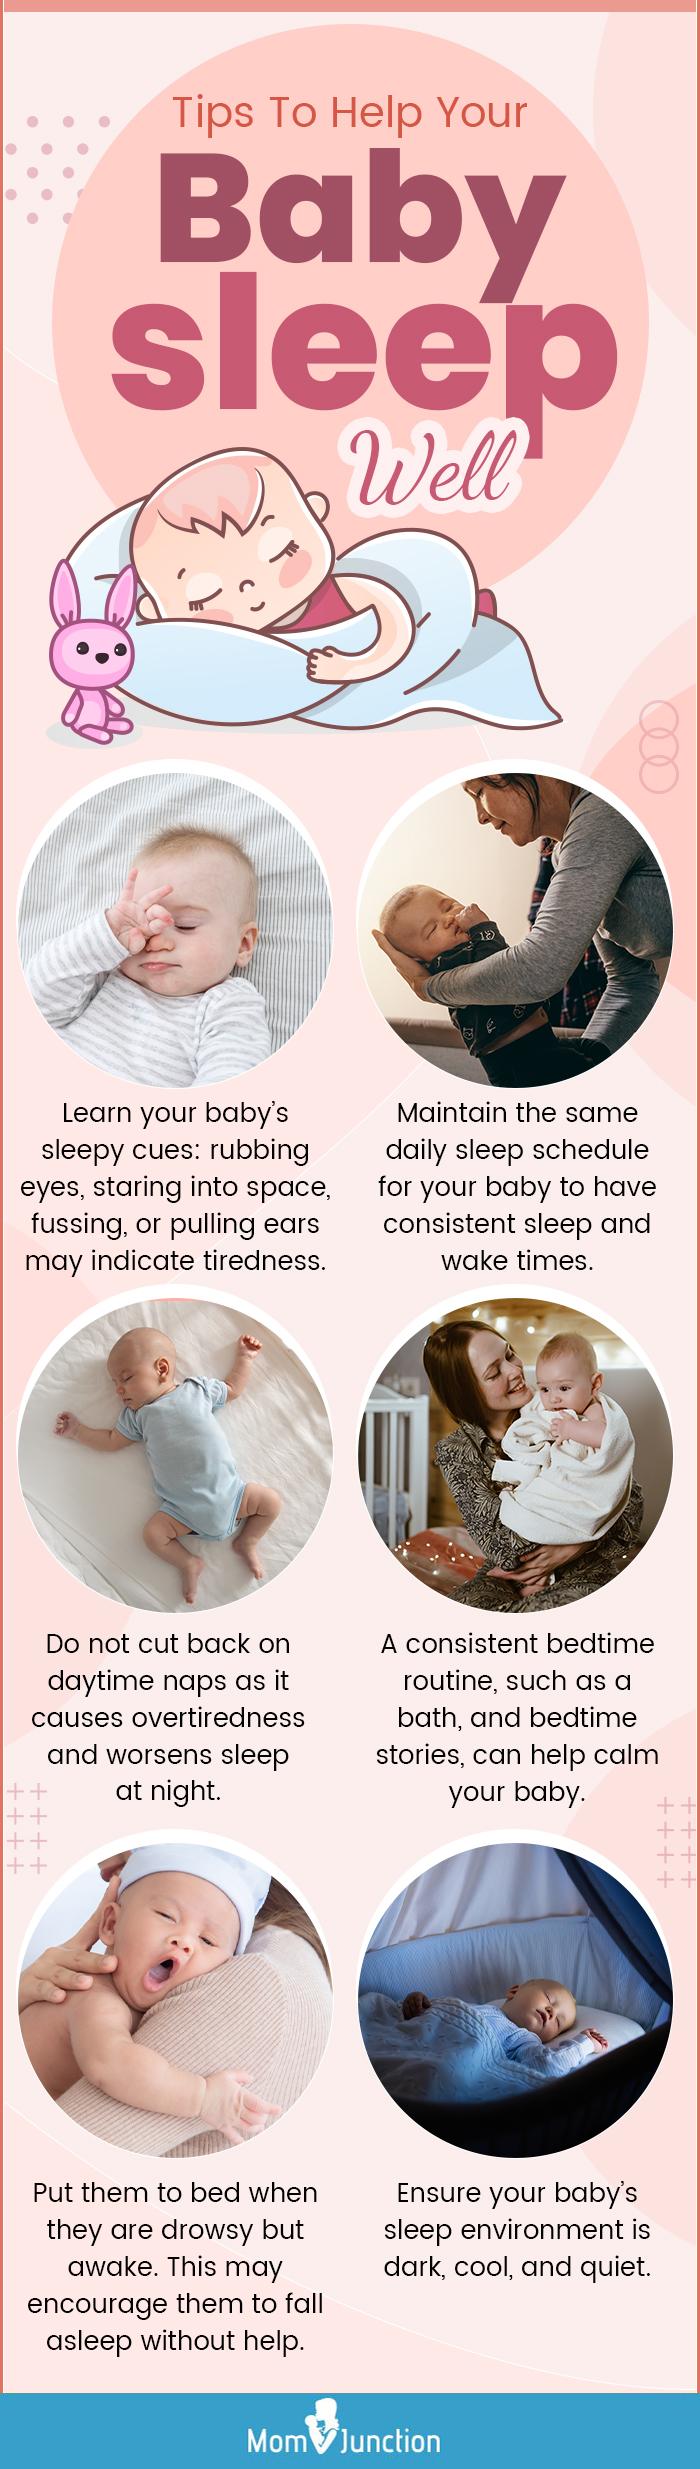 tips to help your baby sleep well(infographic)